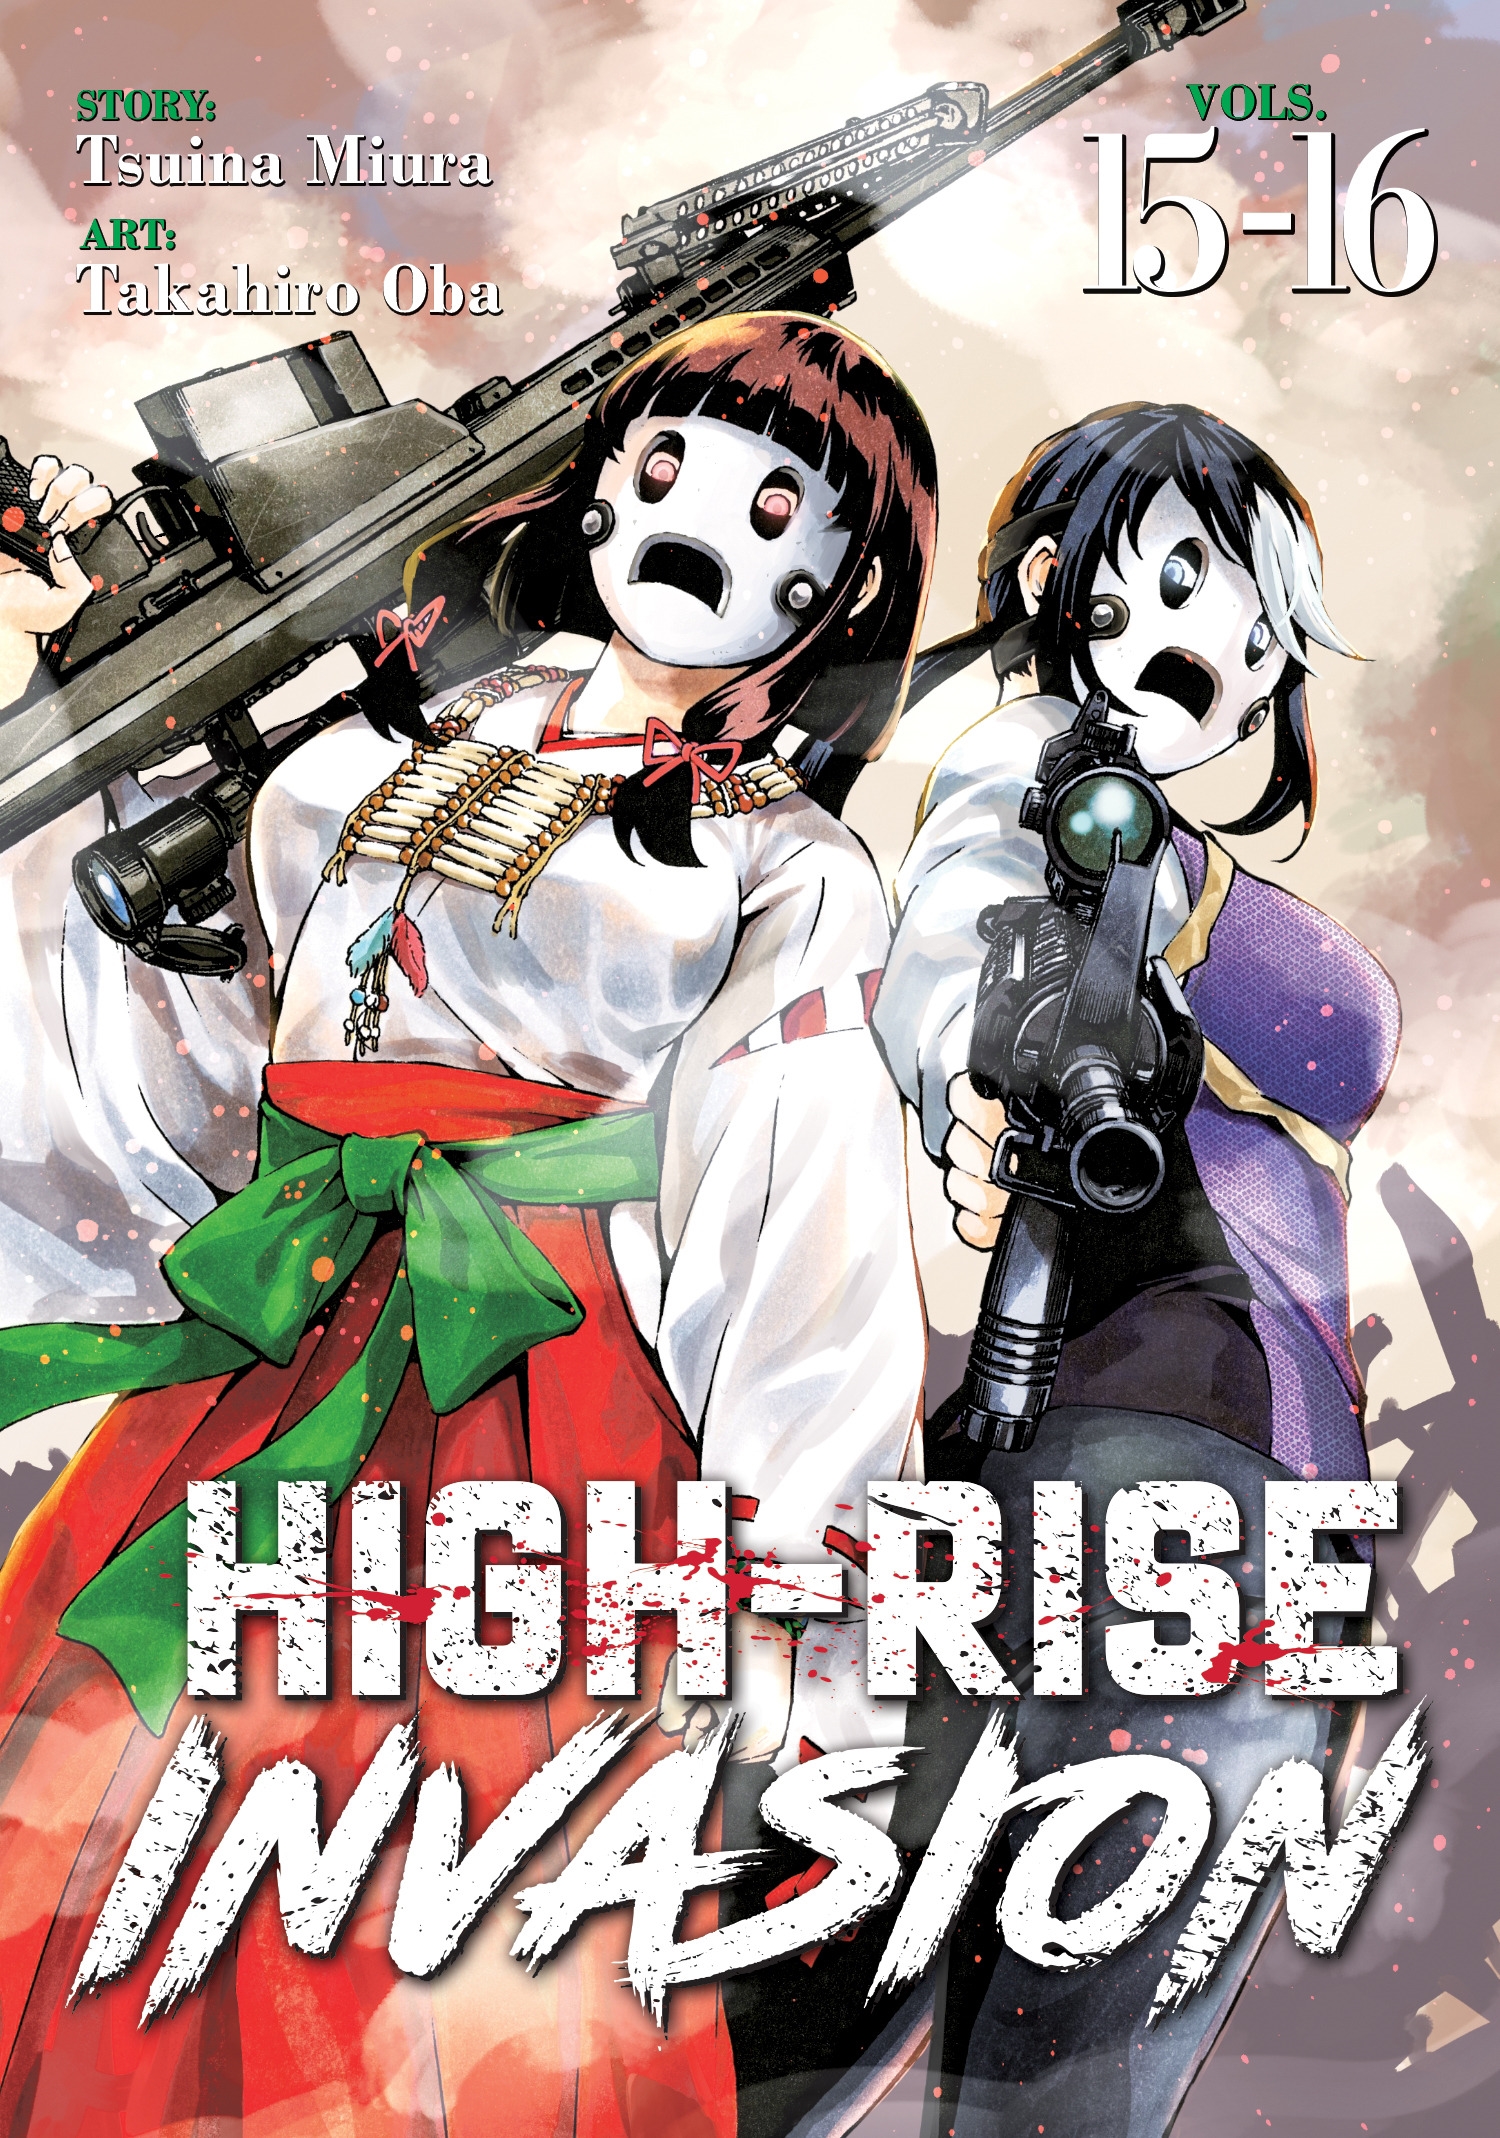 High-Rise Invasion Vol. 5-6: 3: : Miura, Tsuina